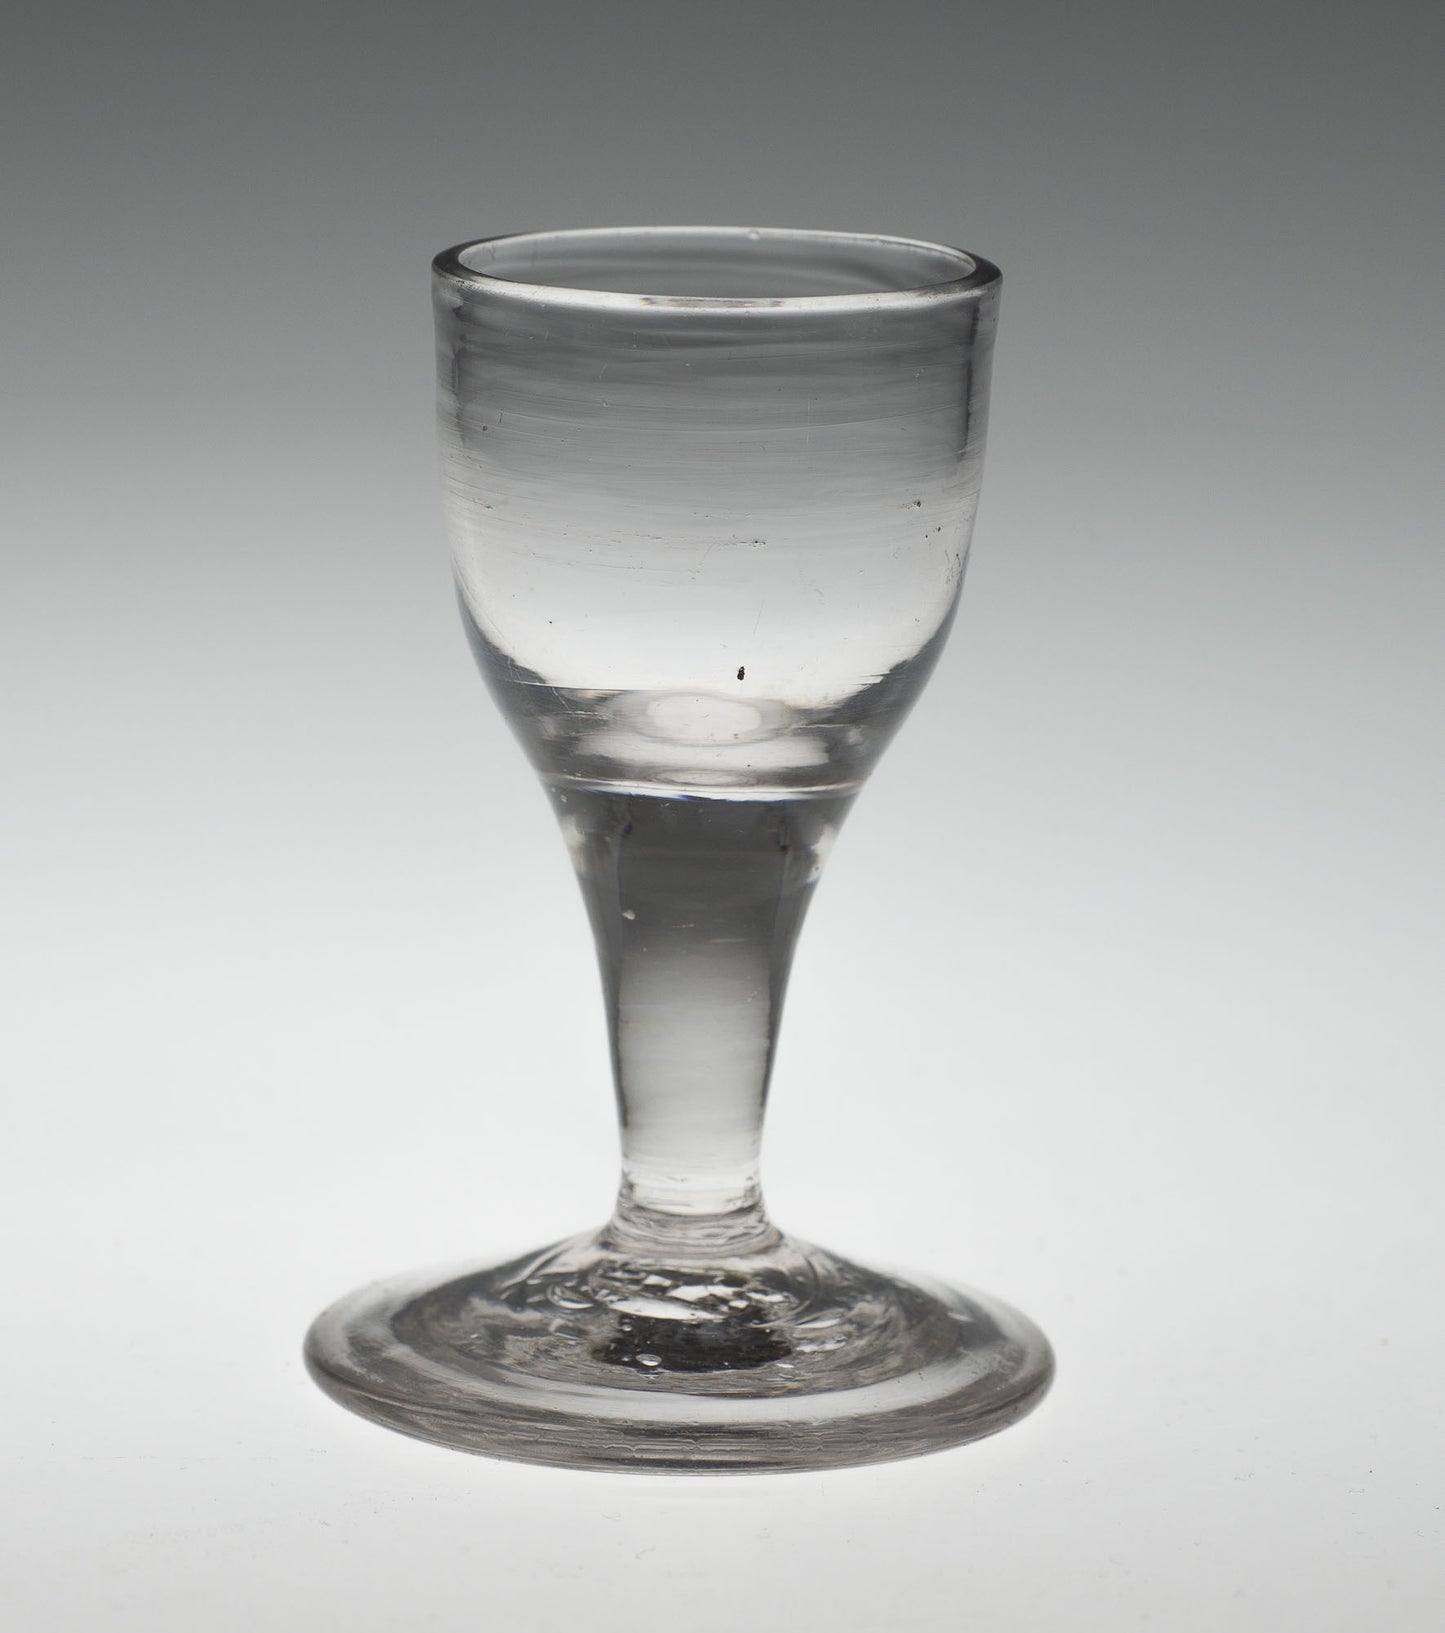 Antique Georgian Short Form Plain Stem Drinking Glass, English Lead Type c1750 (2992)